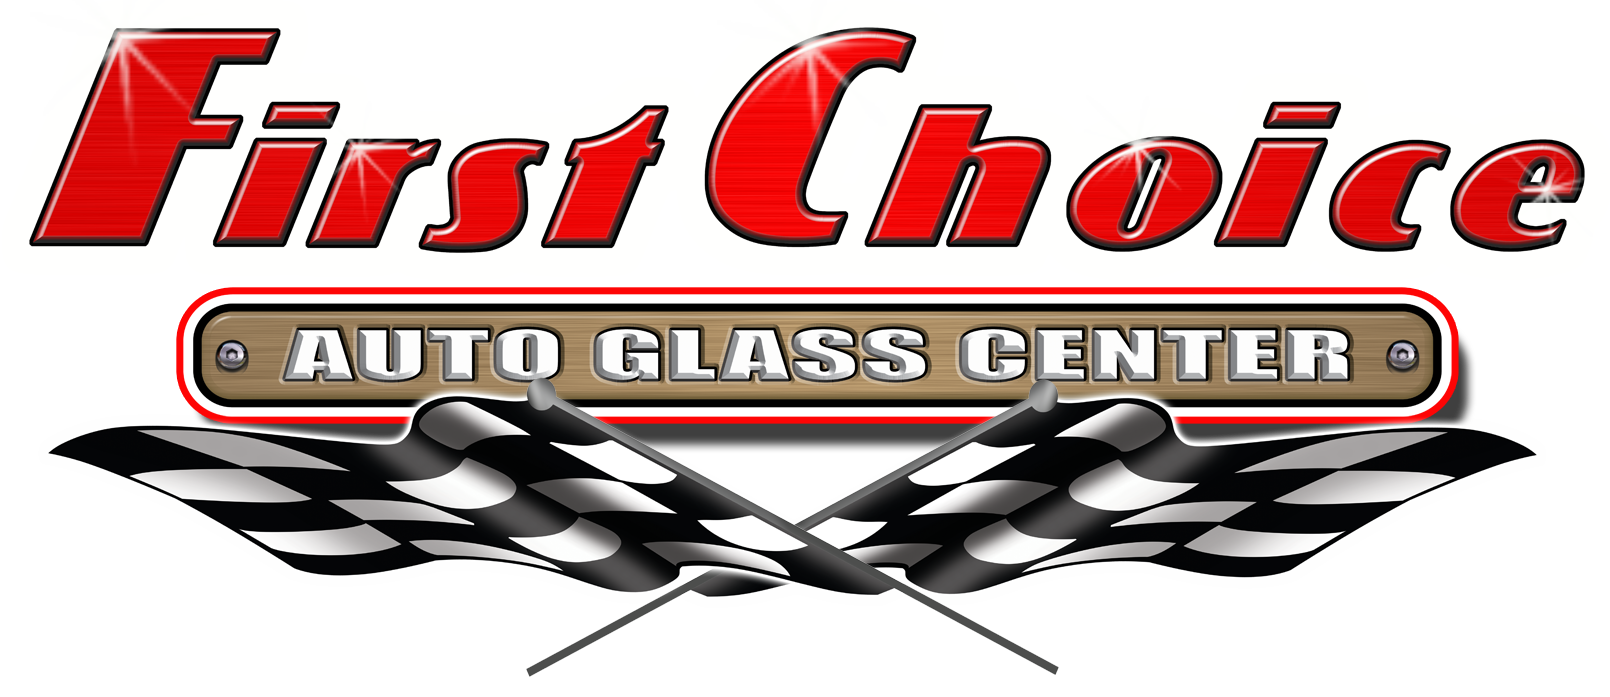 First Choice Auto Glass Center